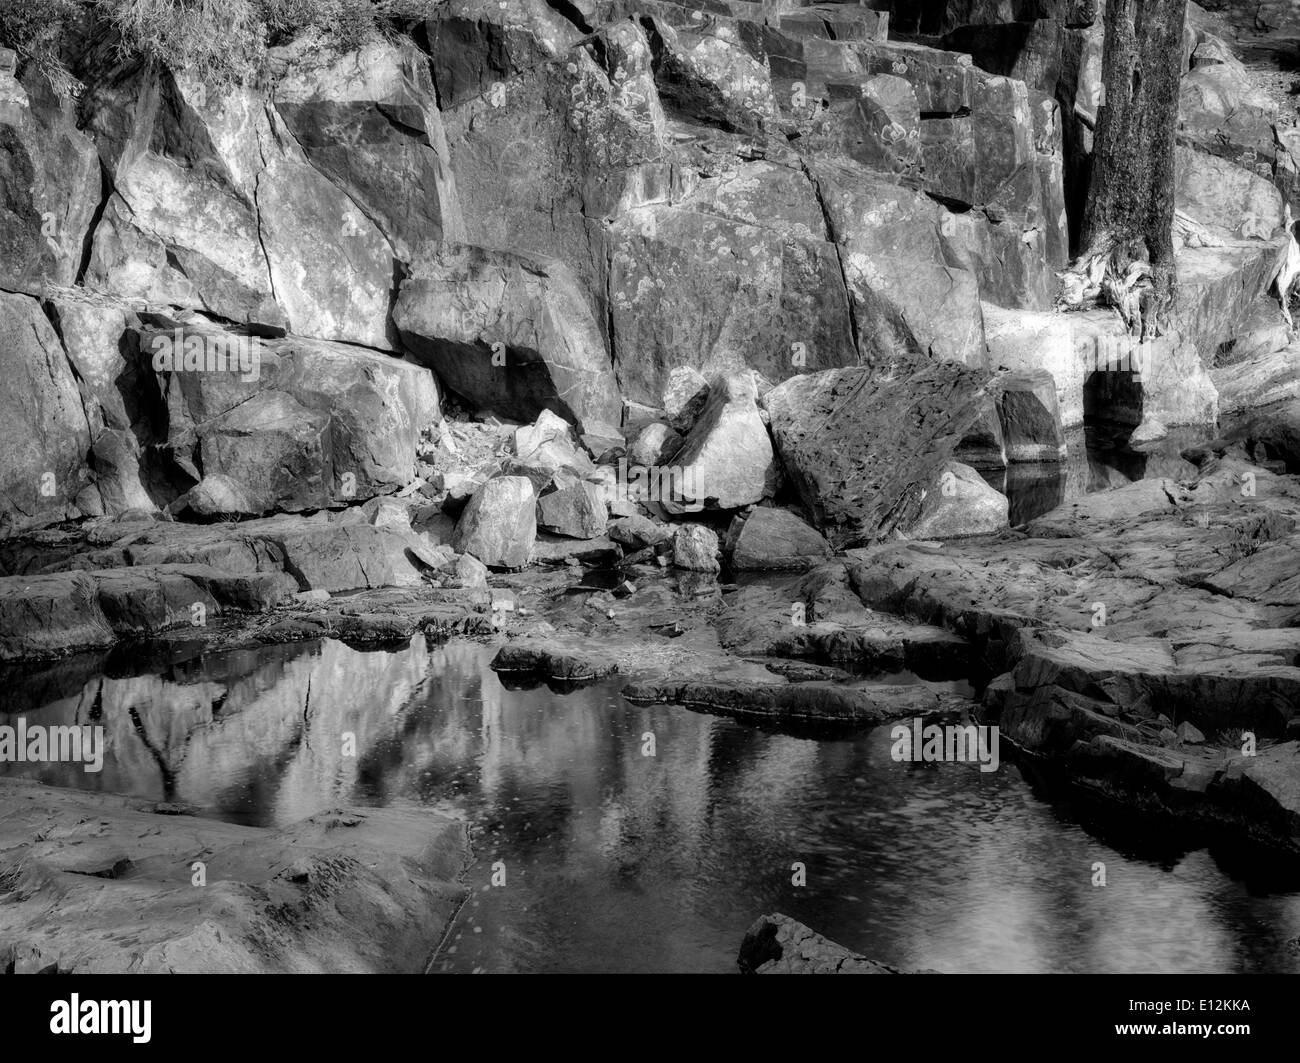 Pool of water with lichen covered rocks on Glen Alpine Creek. Near Fallen Leaf Lake, California Stock Photo